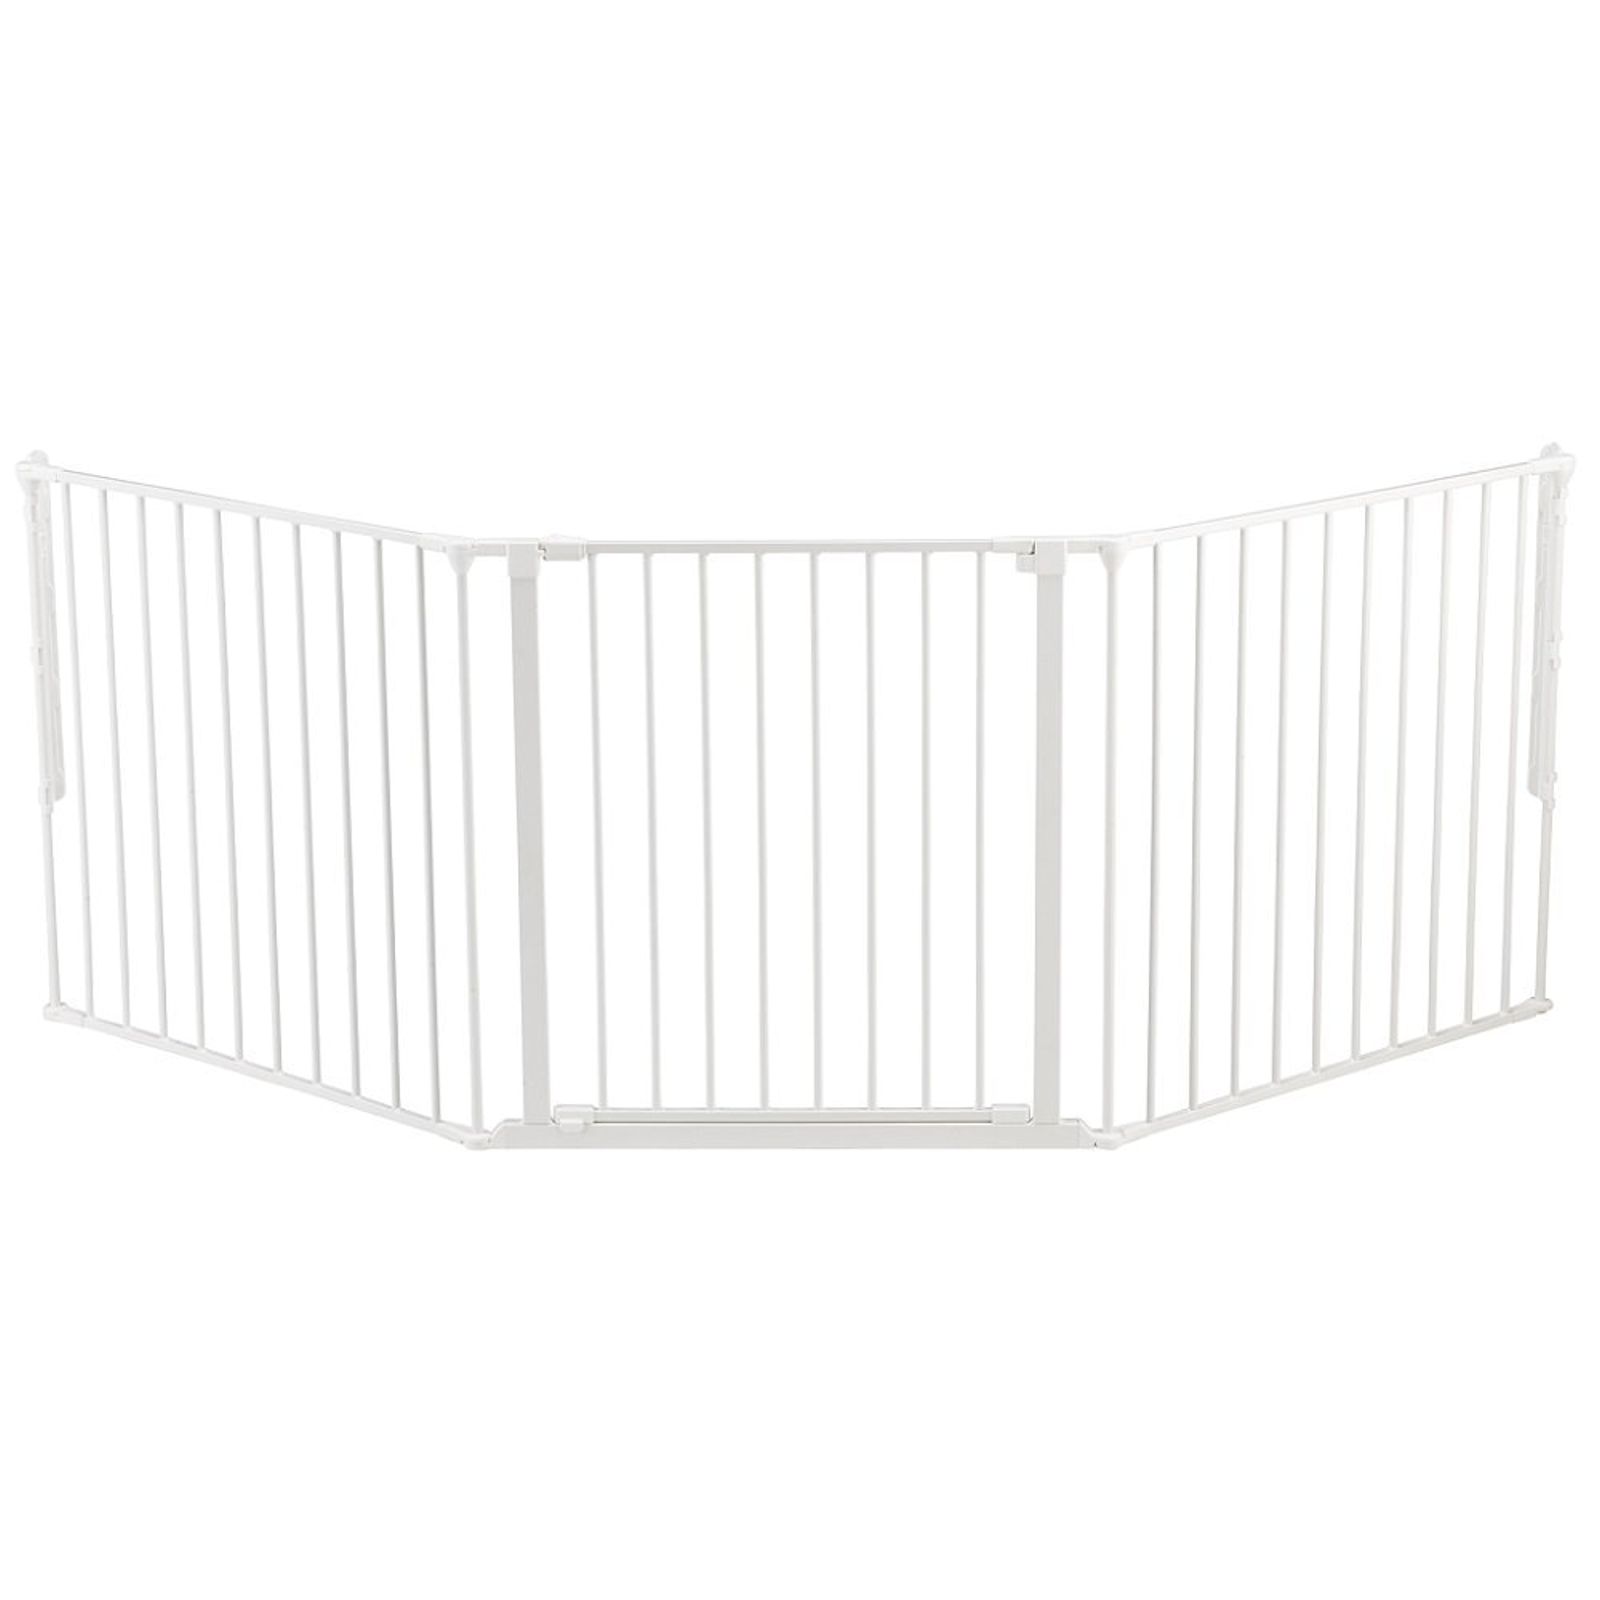 Babydan Configure Gate Large - White